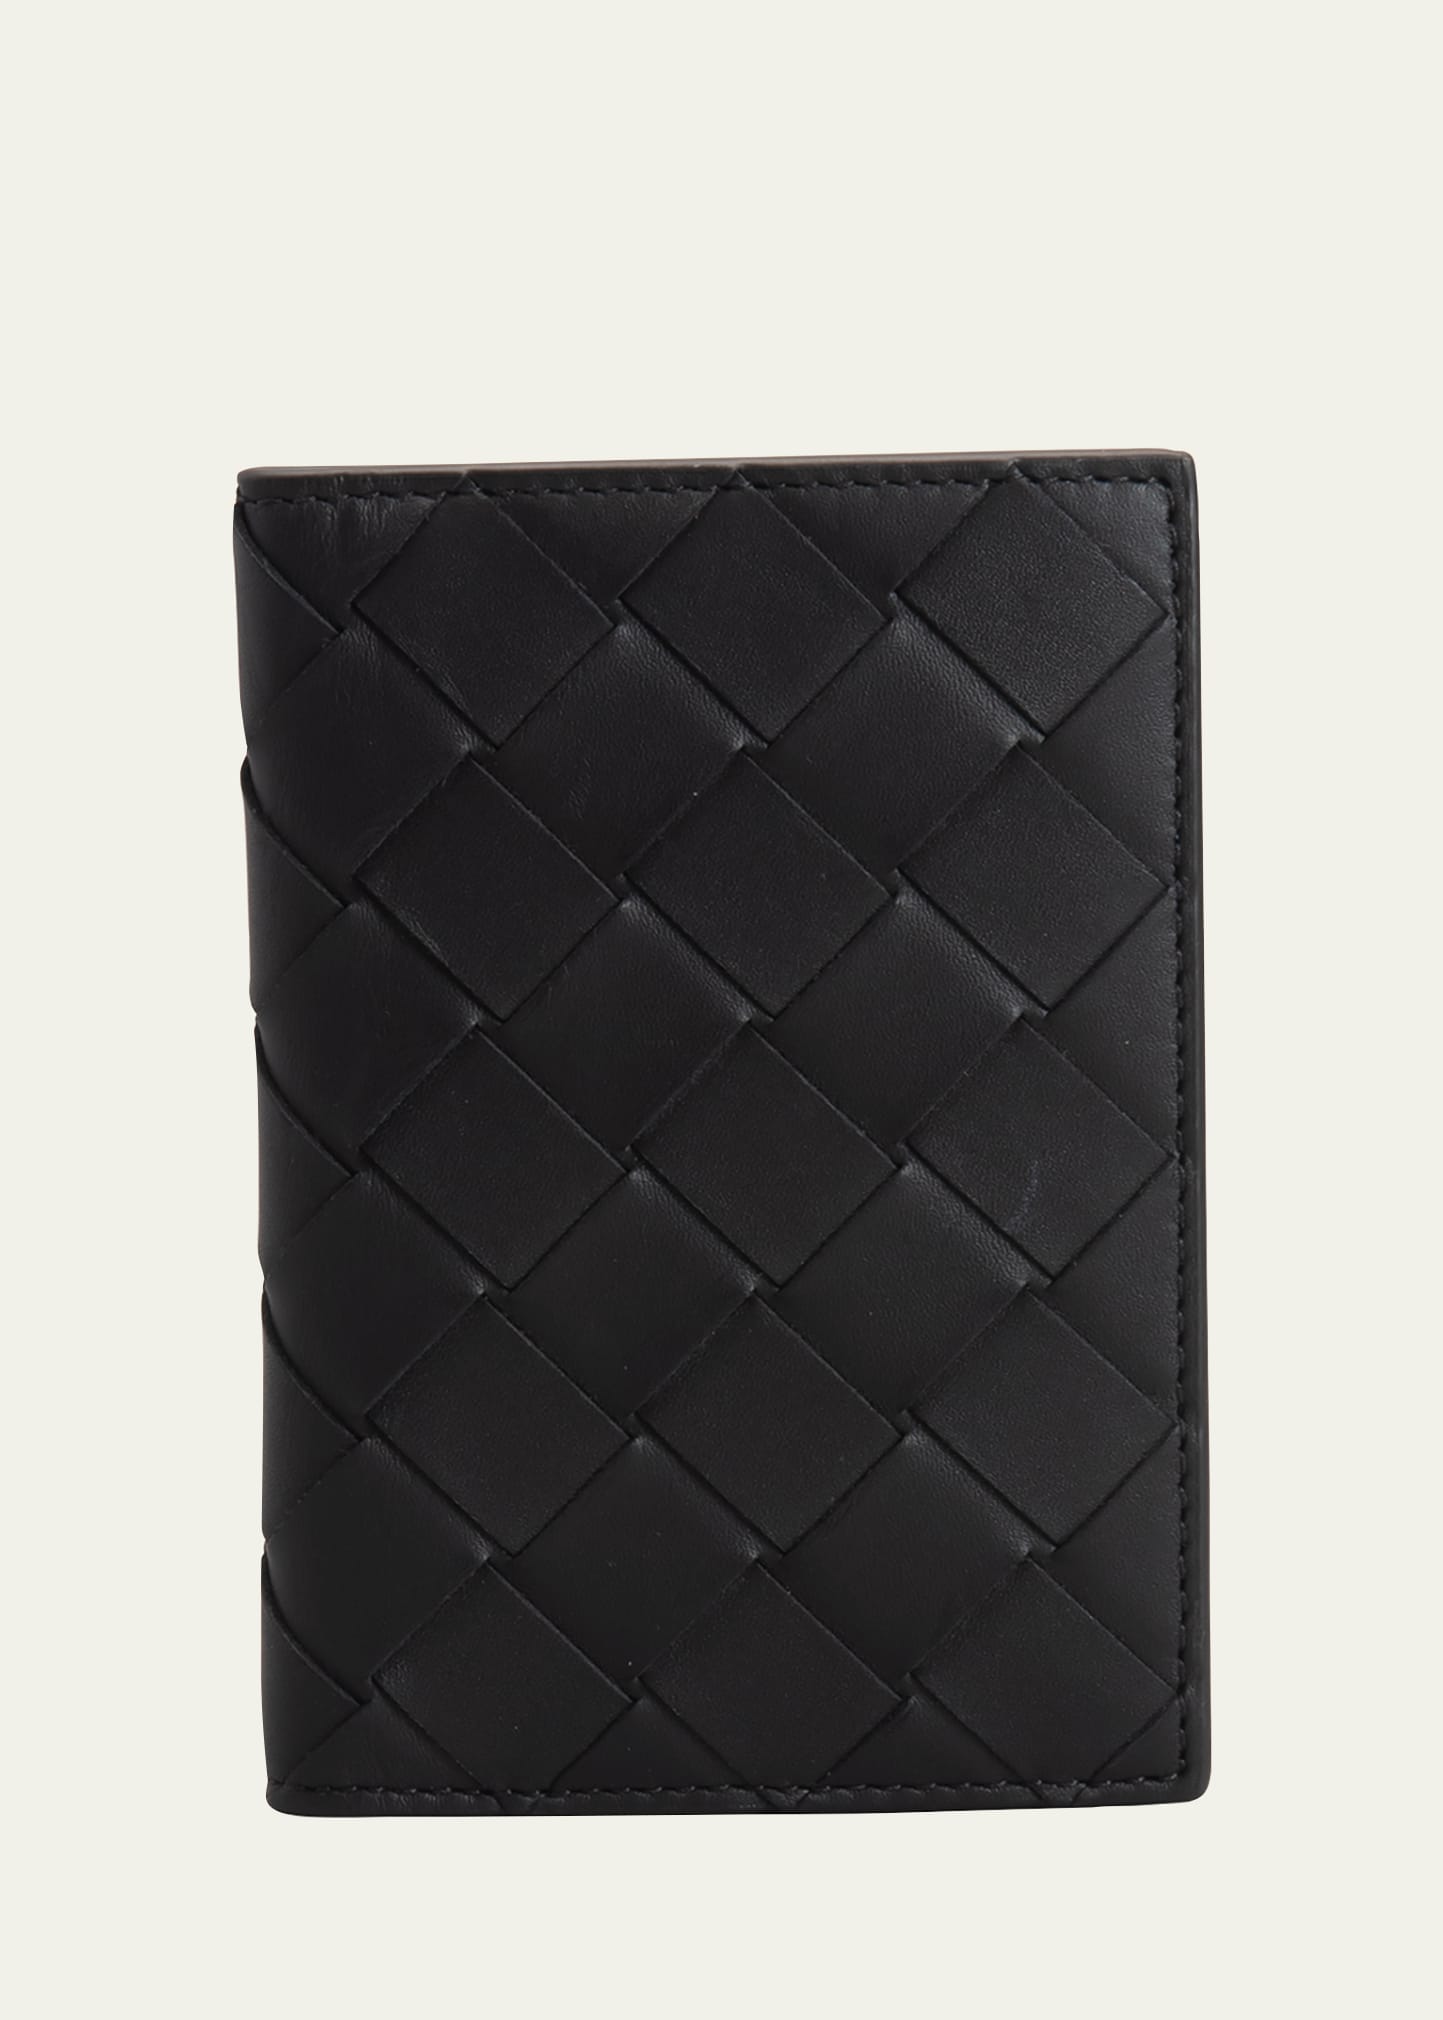 Bottega Veneta Men's Portacard Woven Leather Card Case